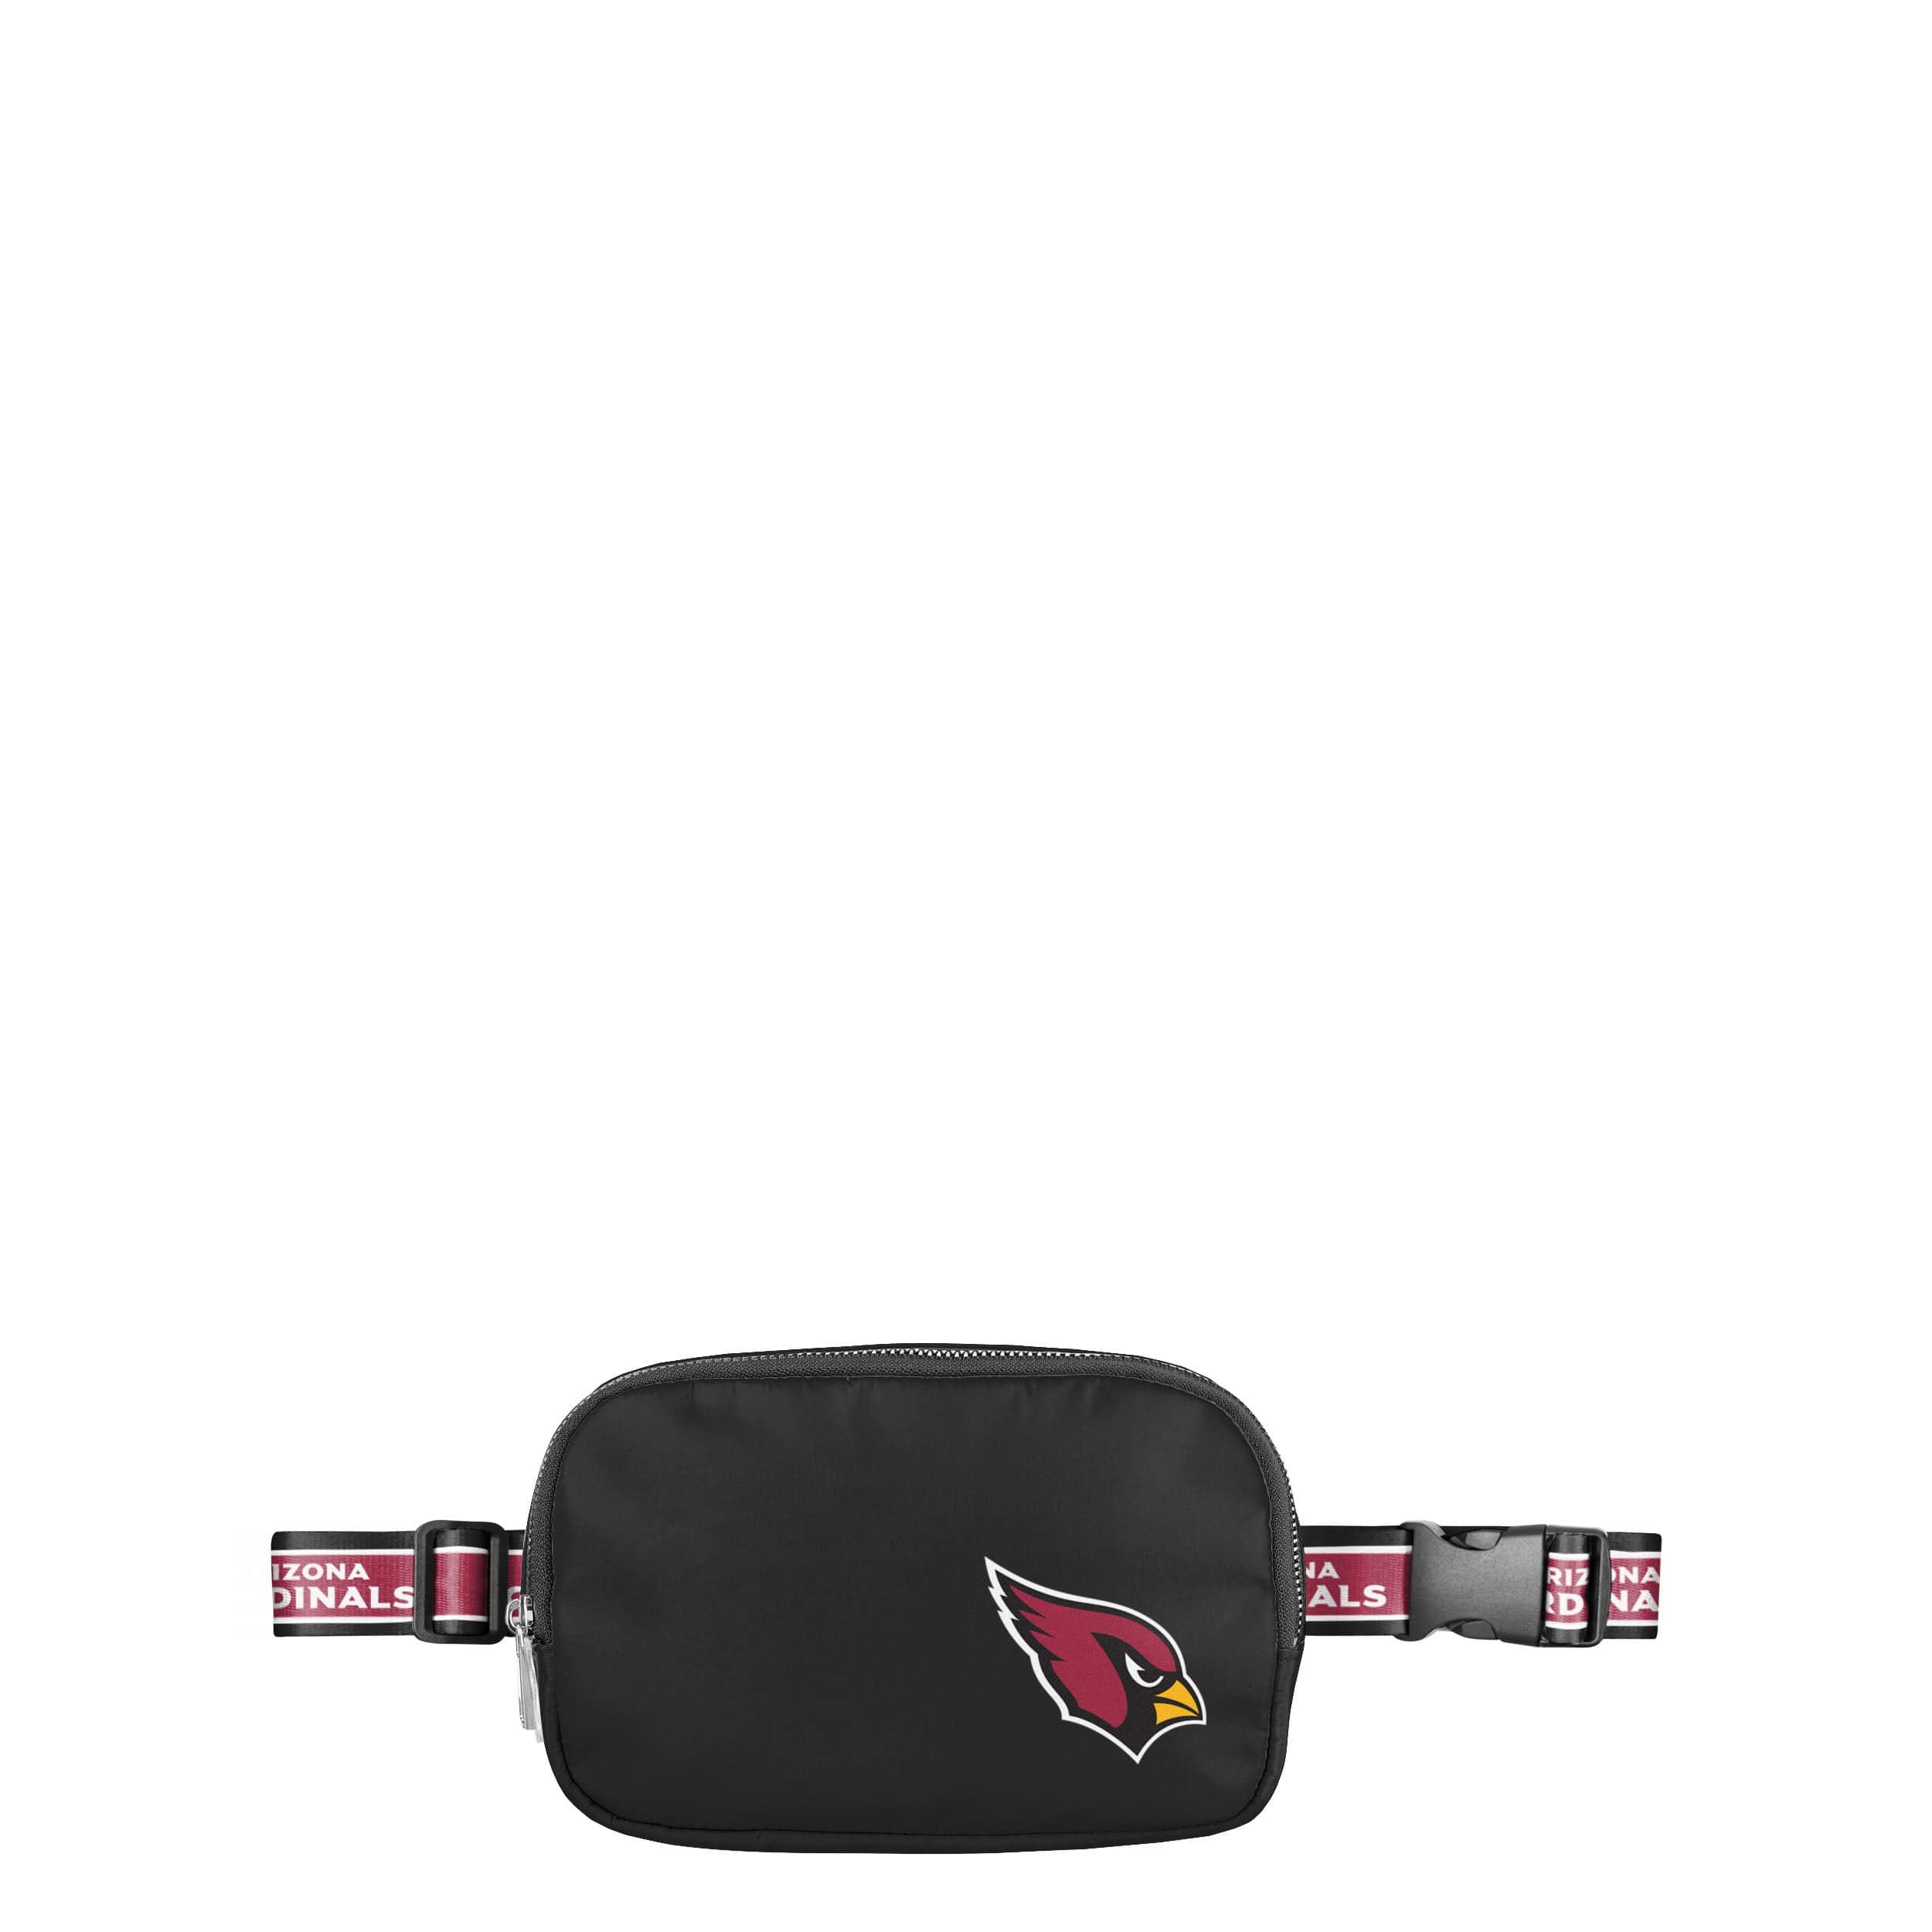 FOCO St. Louis Cardinals Black Camo Duffel Bag